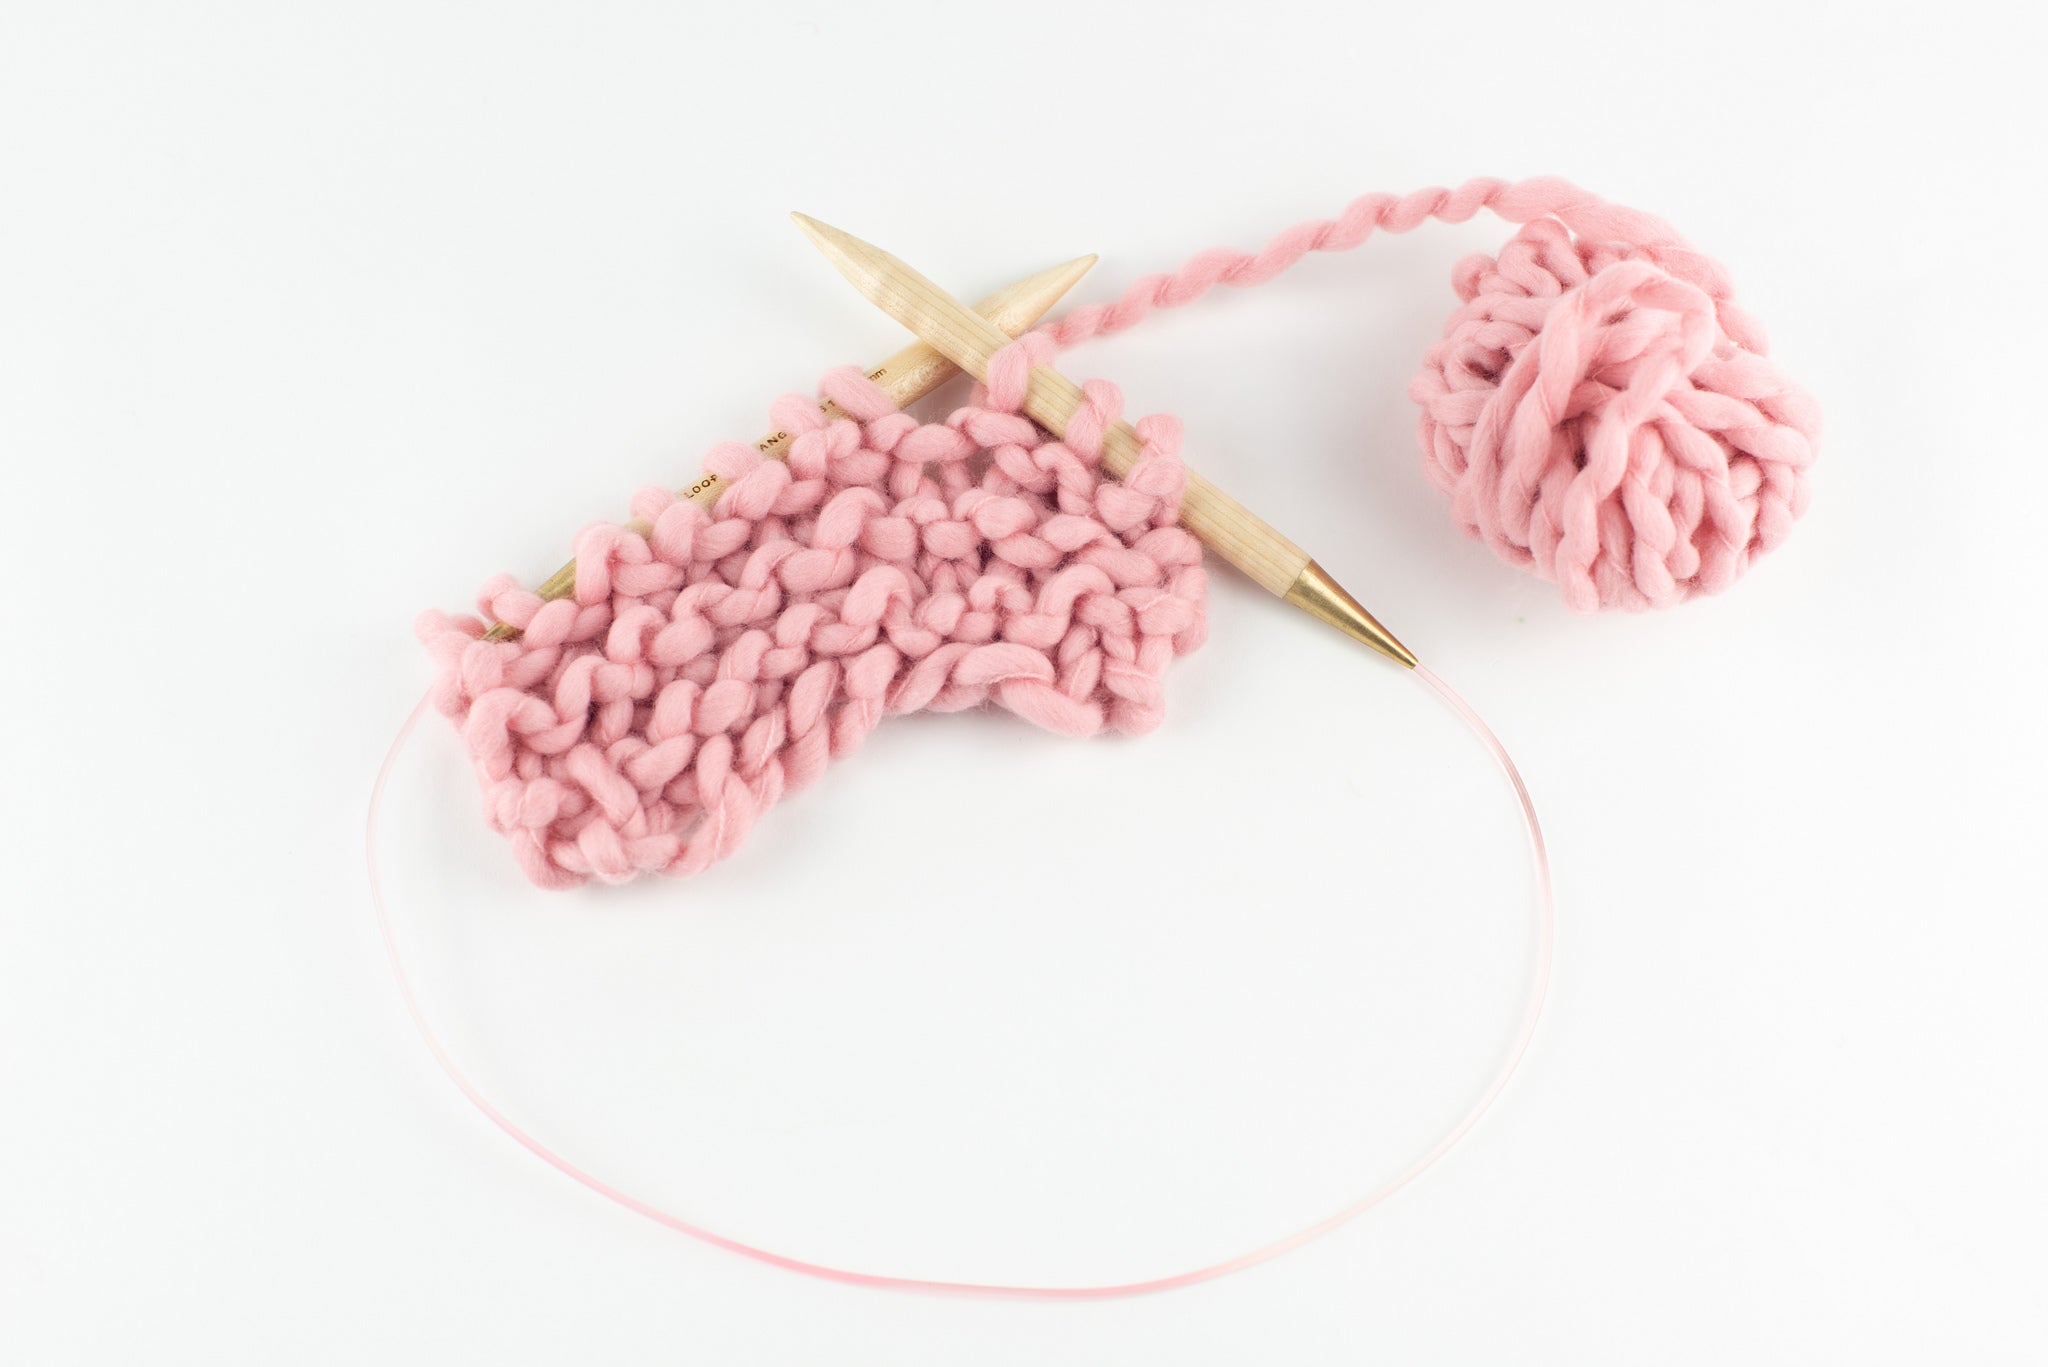 Wooden Knitting Needles 15 mm